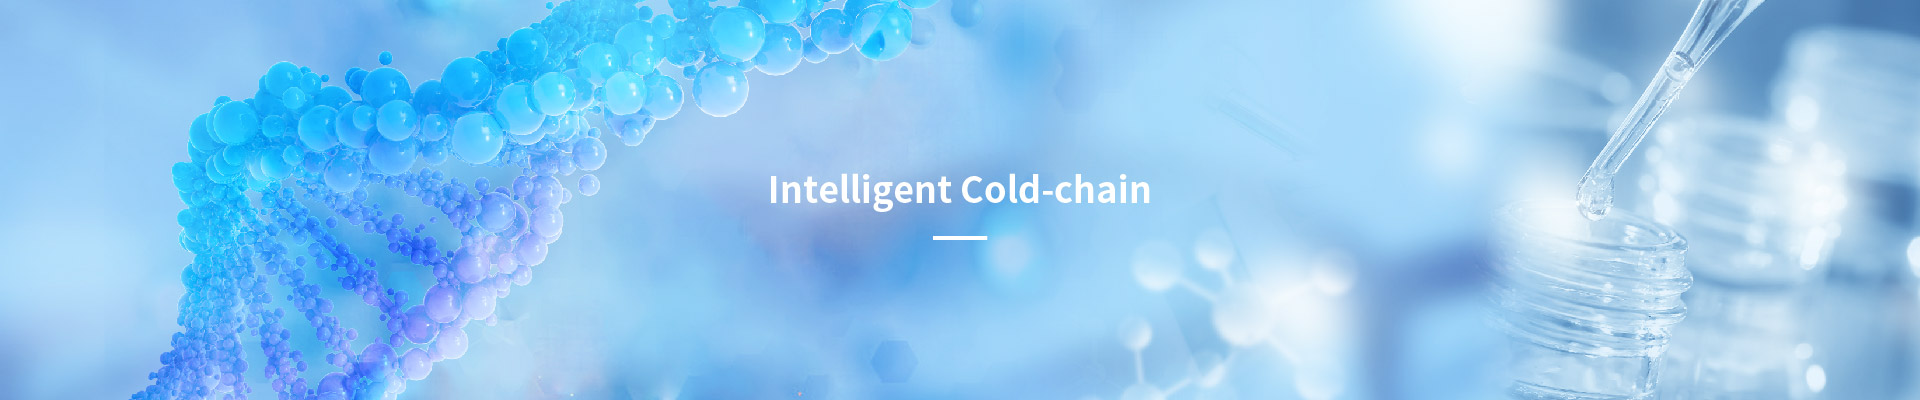 Intelligent Cold-chain